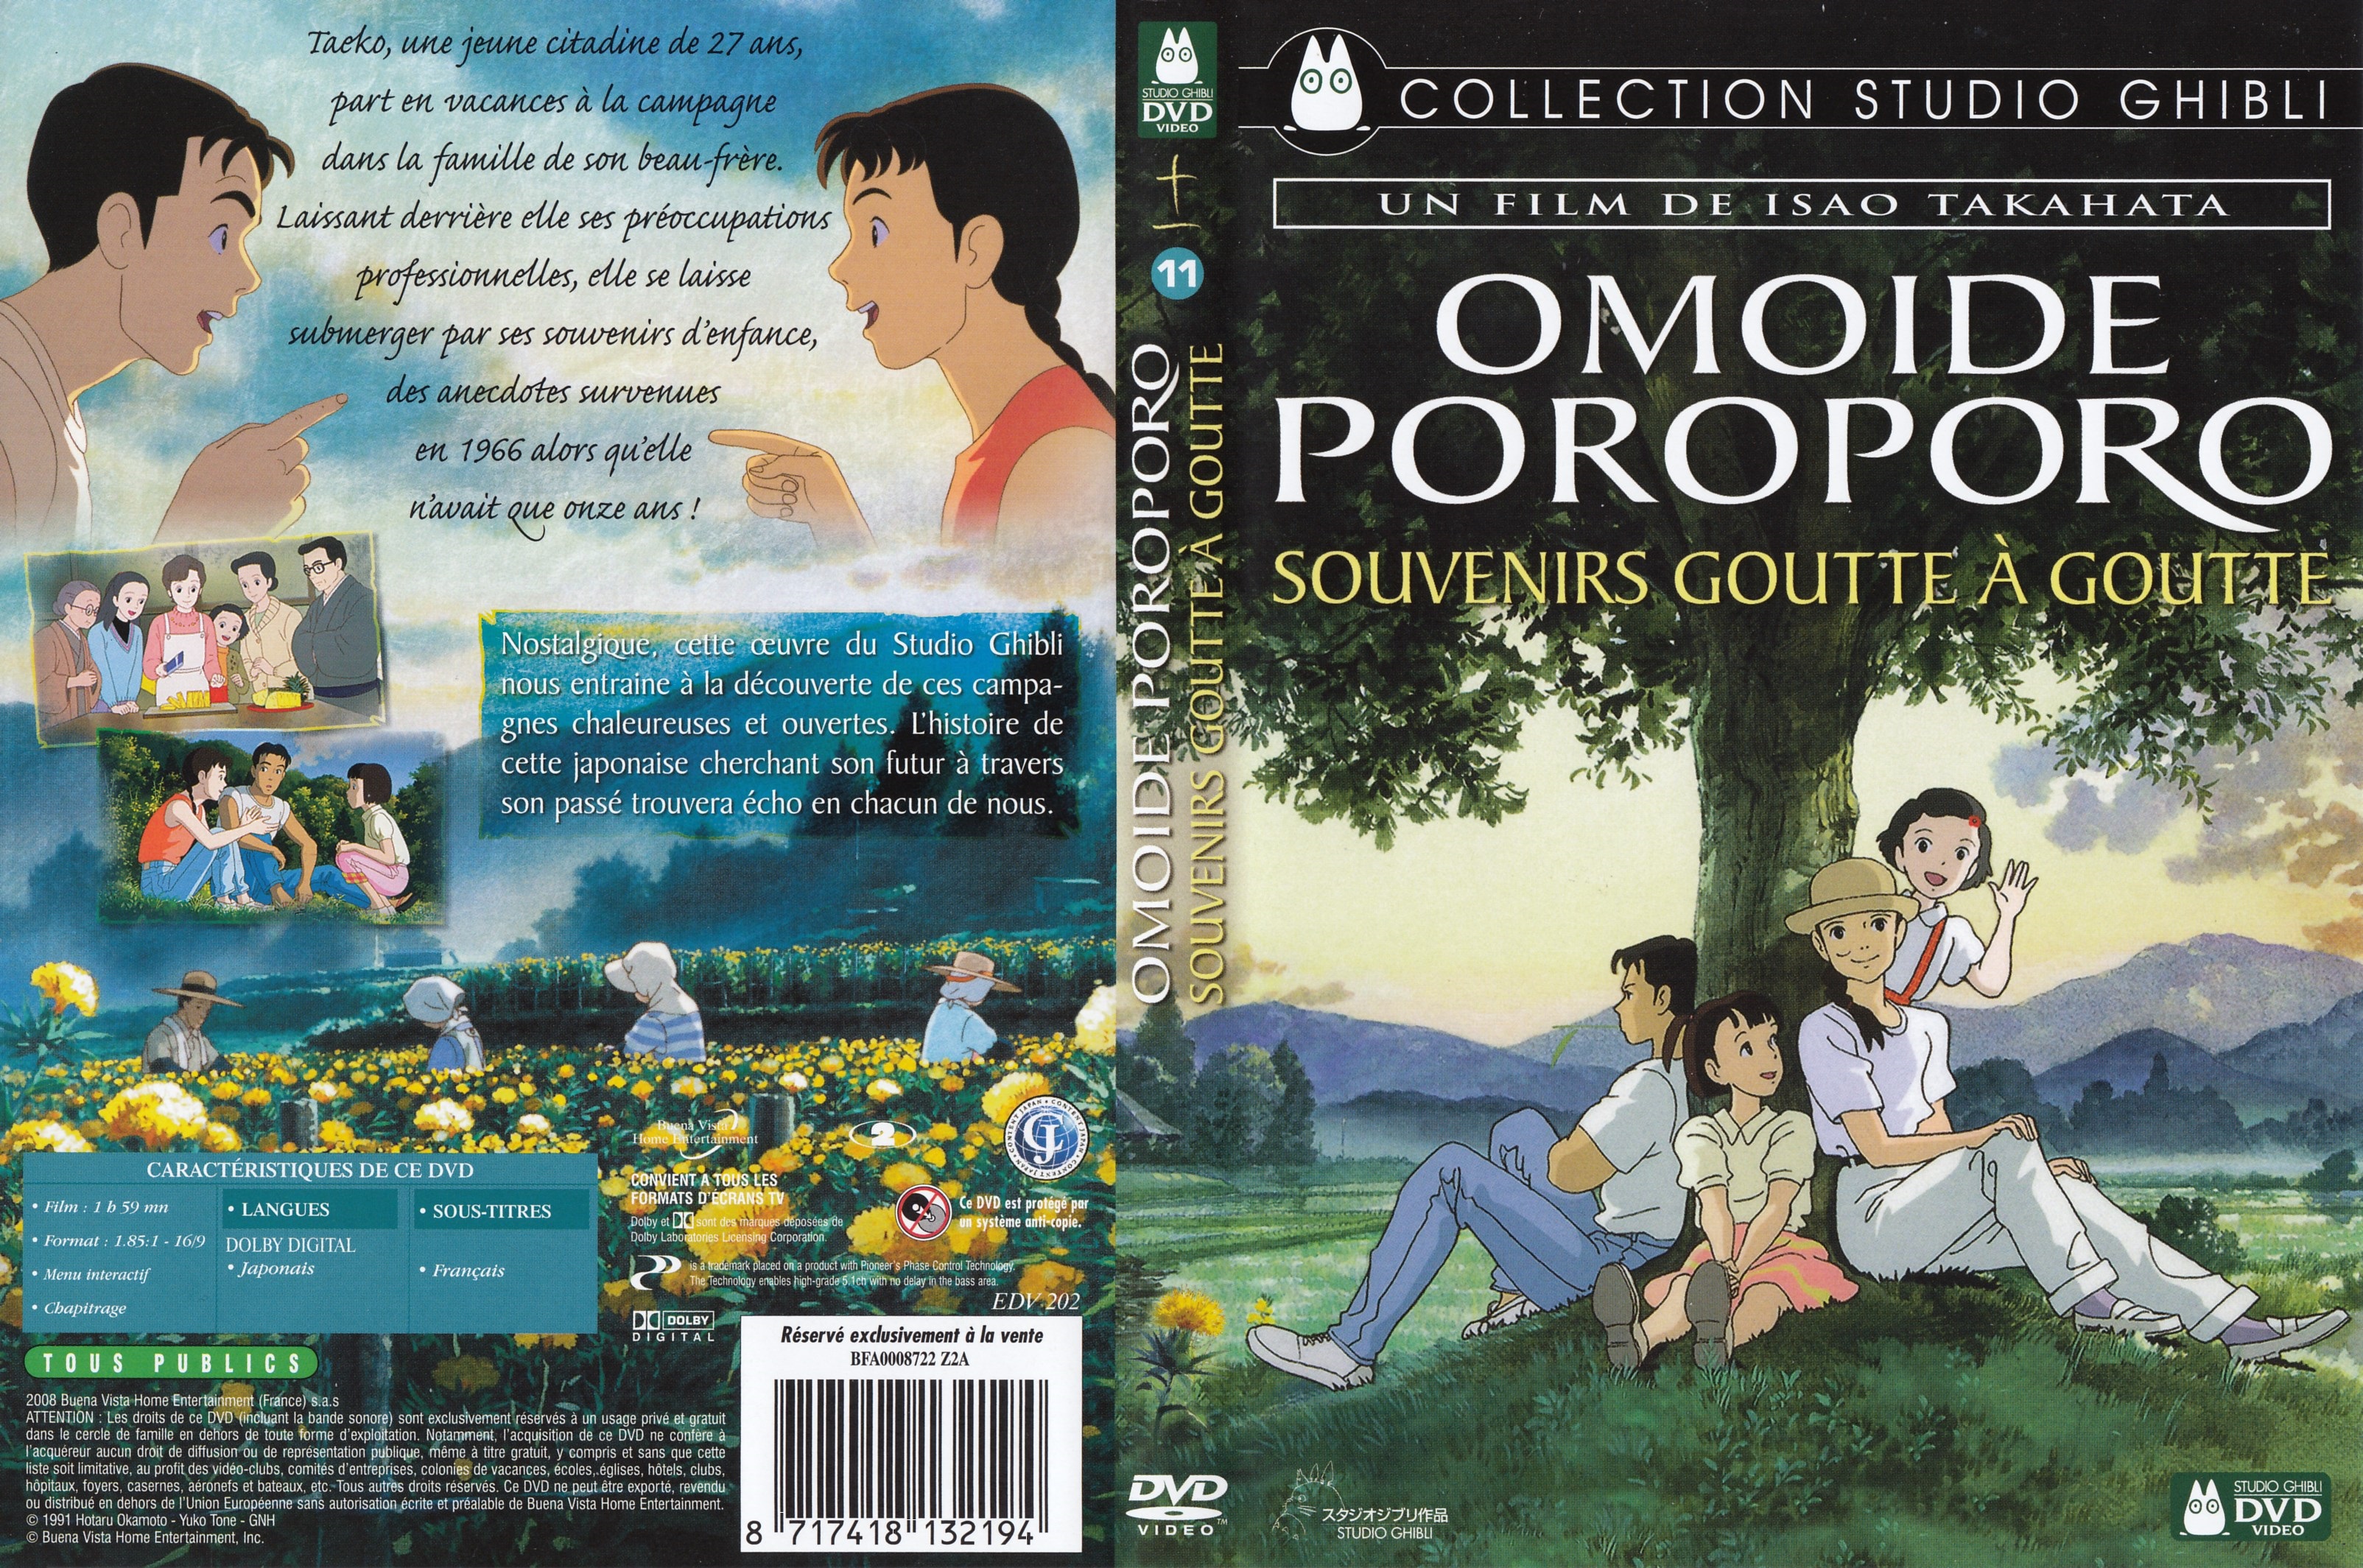 Jaquette DVD Omoide poroporo v2